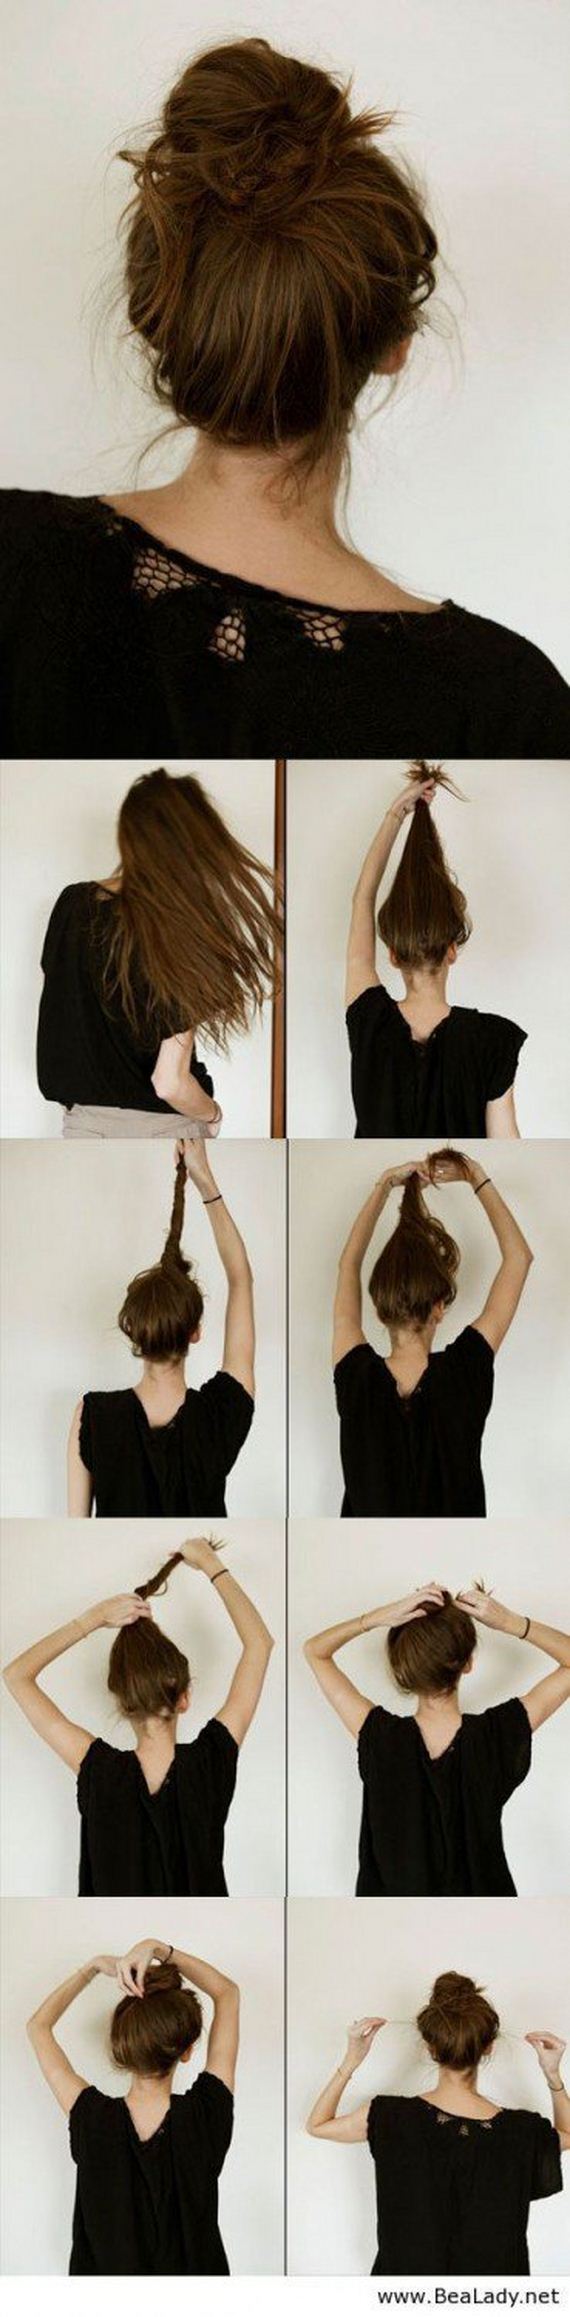 08-DIY-Hairstyles-for-Long-Hair